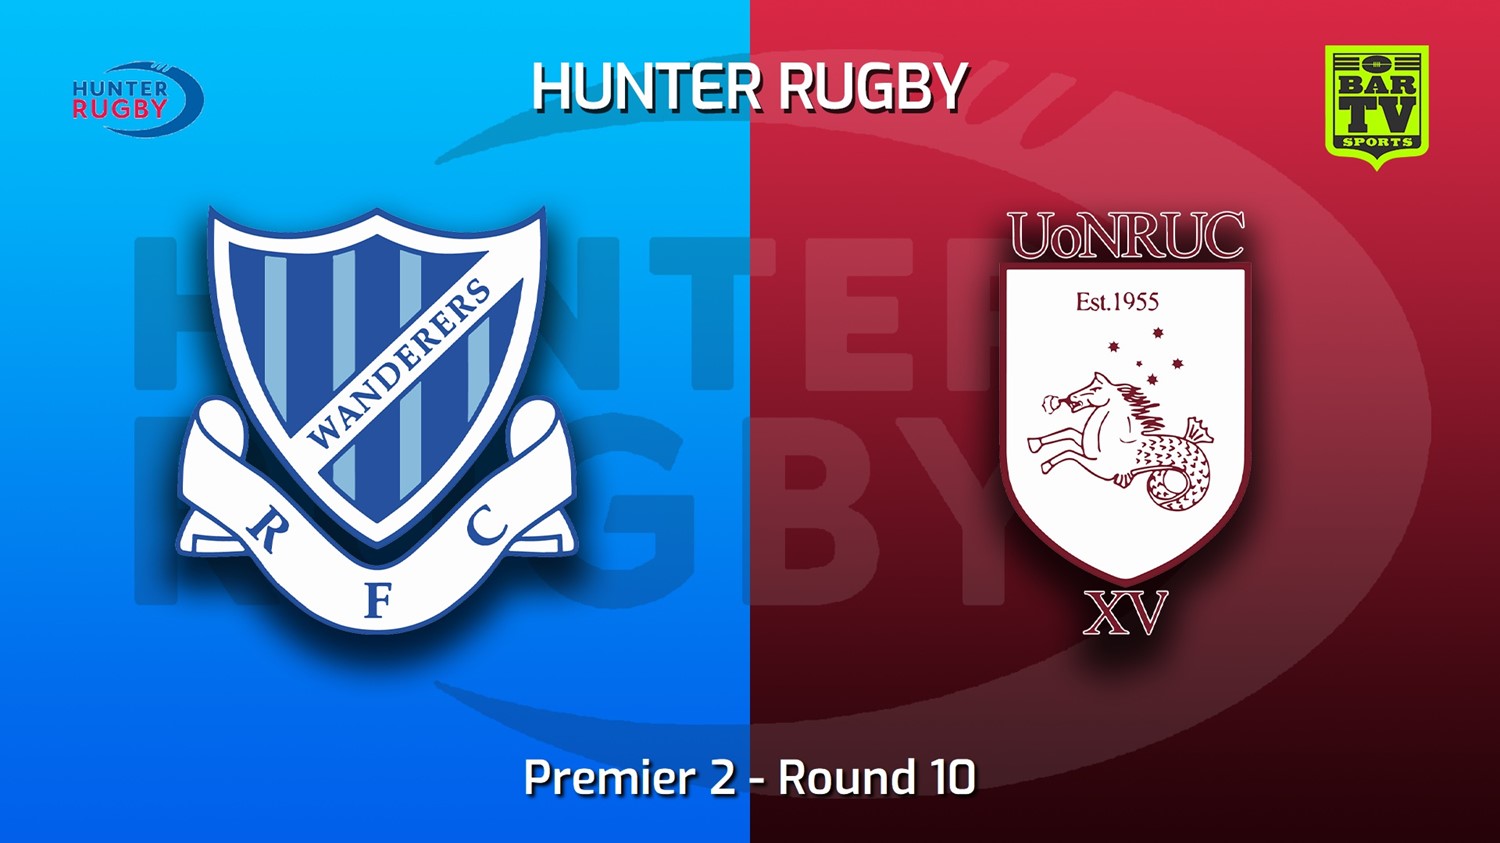 220702-Hunter Rugby Round 10 - Premier 2 - Wanderers v University Of Newcastle Slate Image